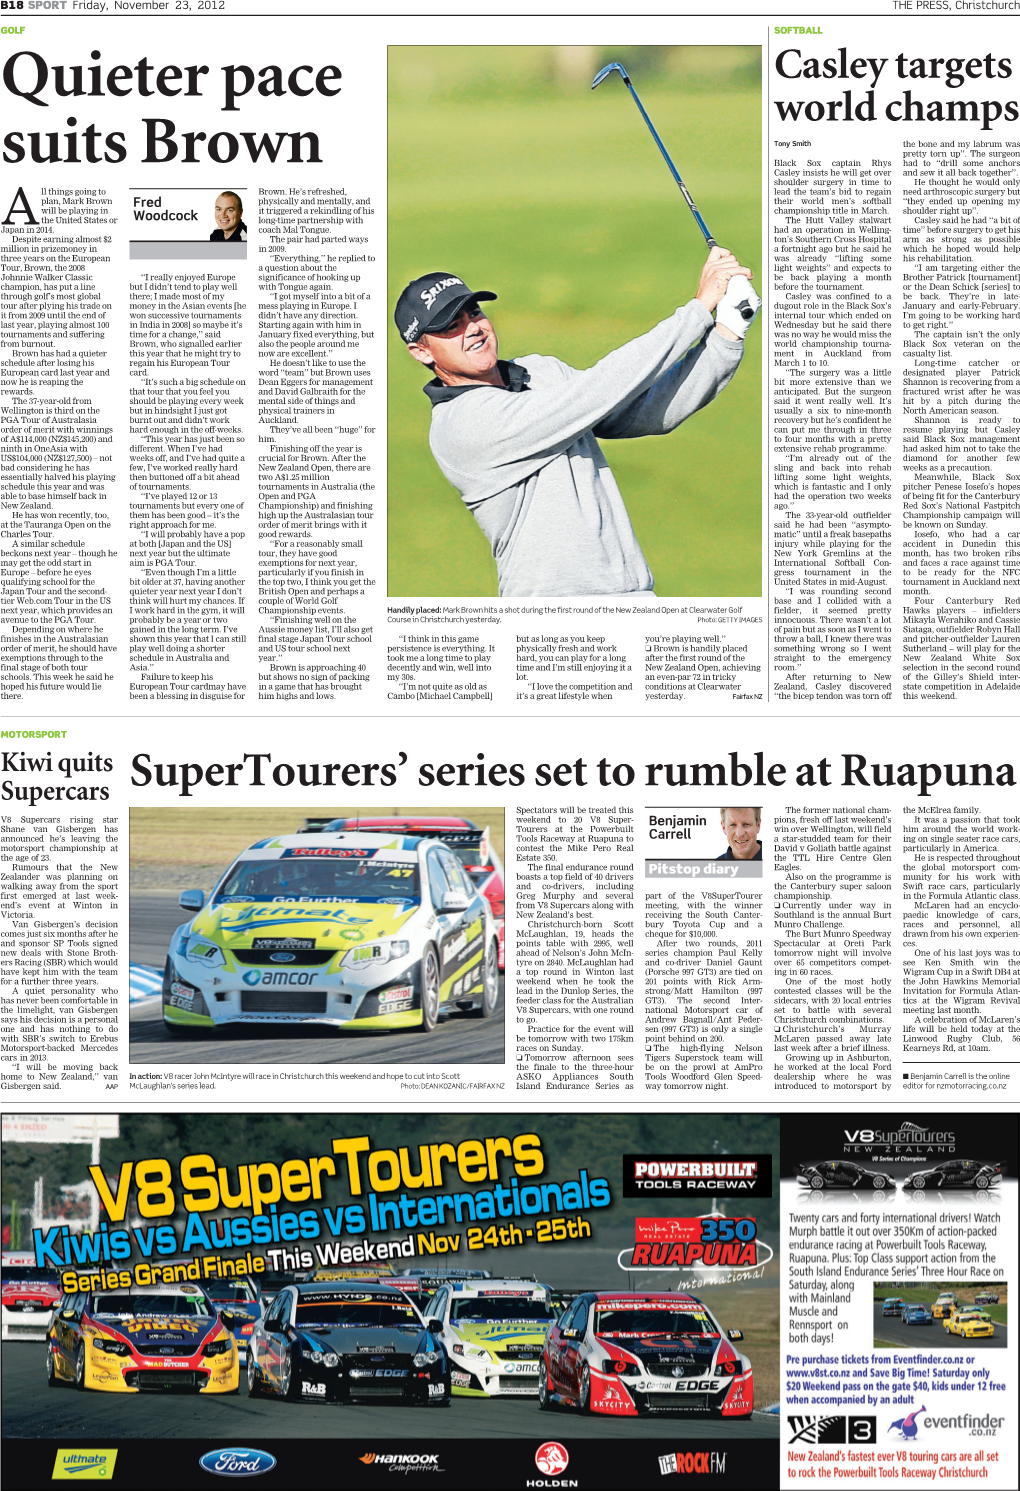 Supertourers' Series Set to Rumble at Ruapuna